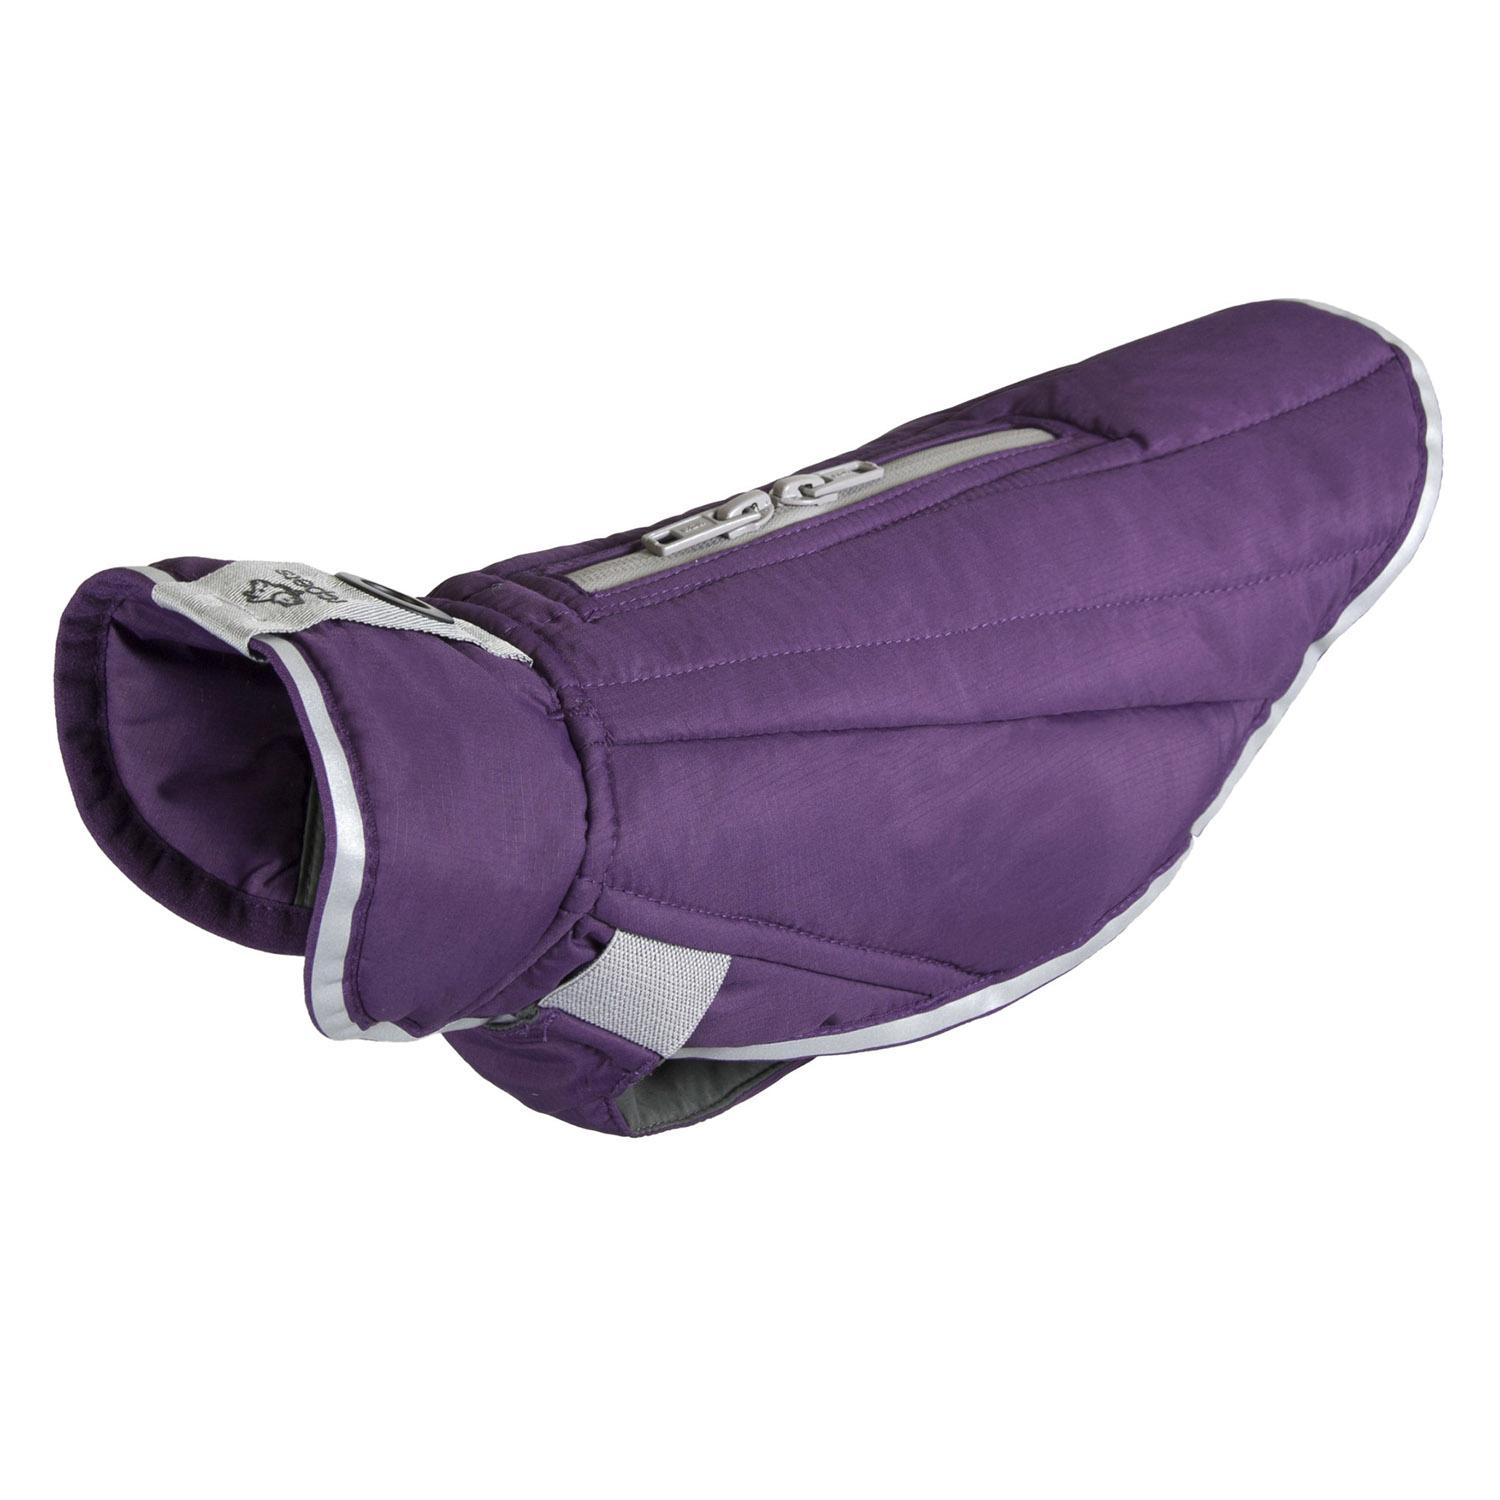 Nimbus Puffer Dog Coat - Plum Purple and Grey